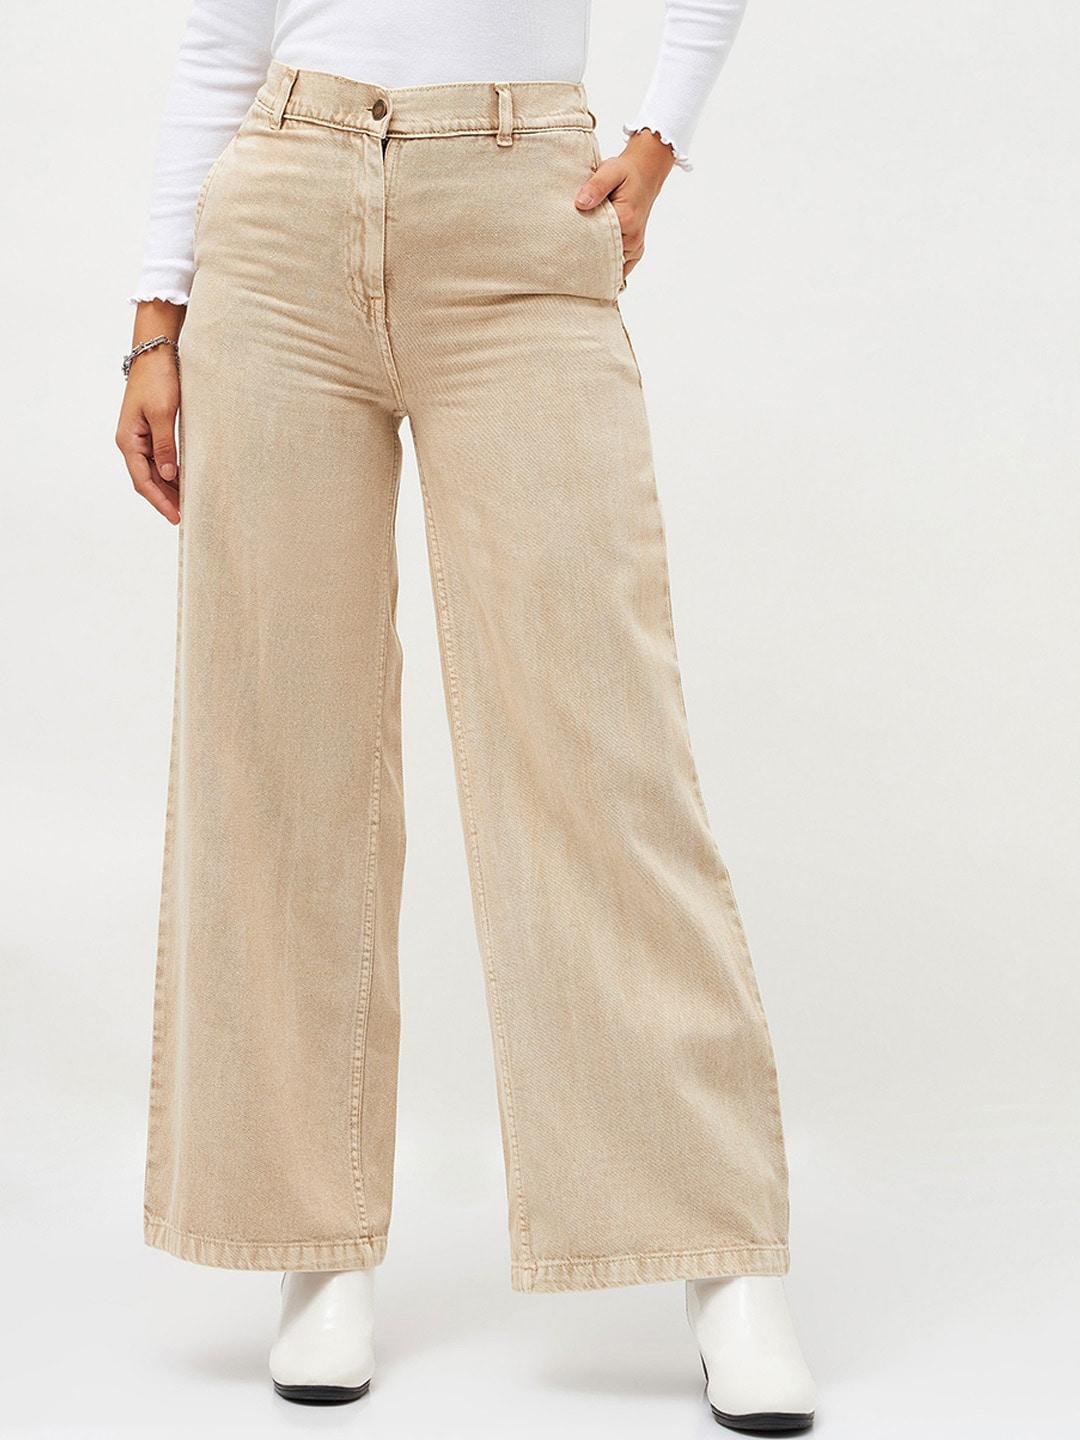 sassafras-women-flared-high-rise-pure-cotton-jeans